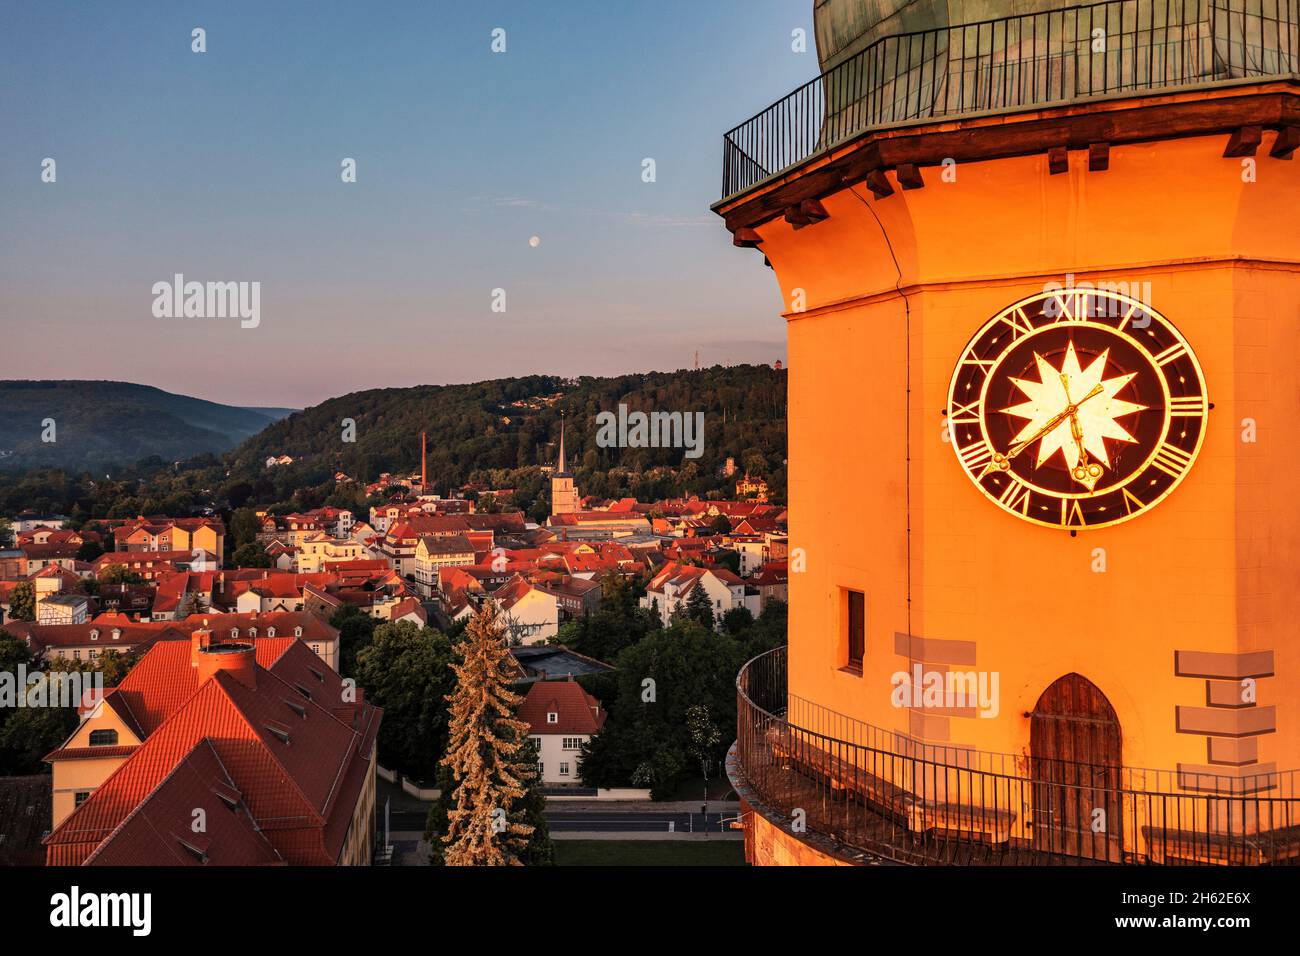 germania,turingia,arnstadt,neideckturm,orologio torre,jakobsturm (sfondo),città,panoramica,luce del mattino Foto Stock